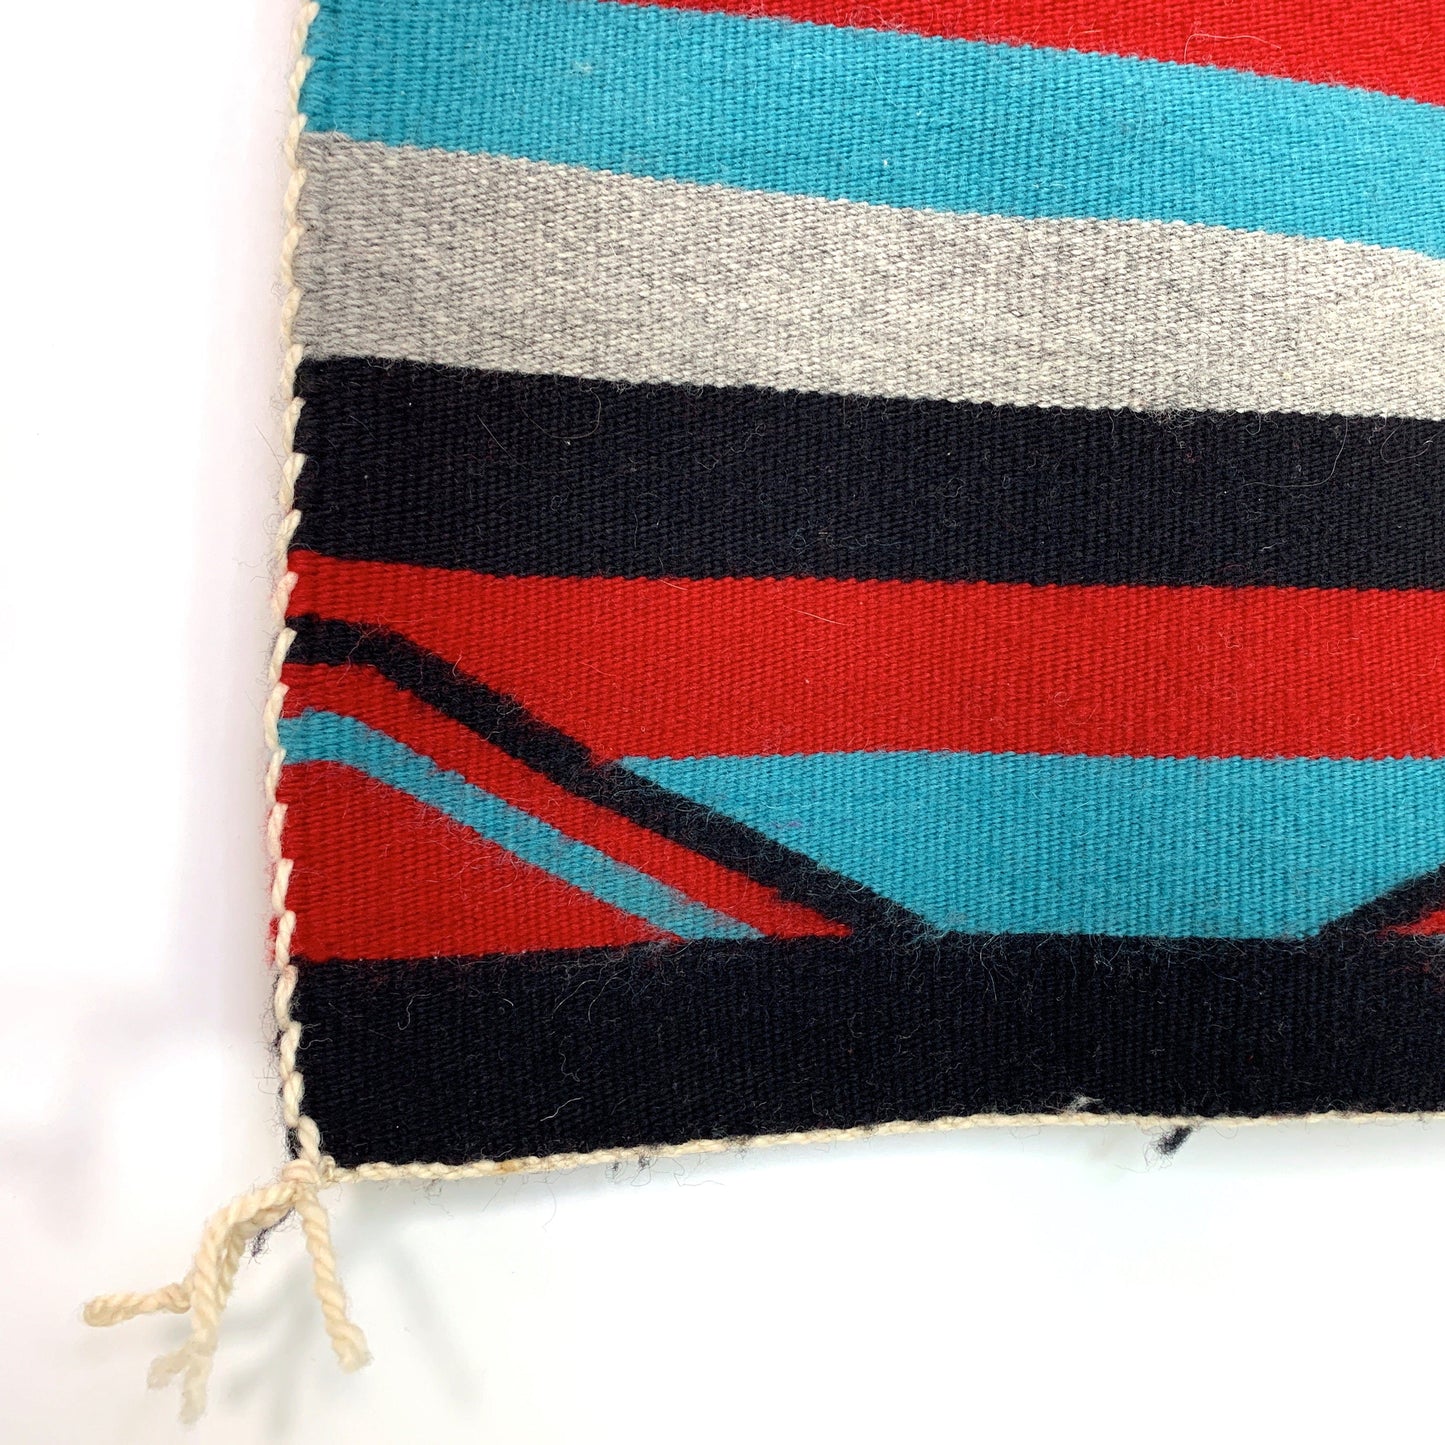 Vintage Navajo Hand-Woven Geometric Striped Kilim Rug by Lena Begay 42” x 27.5”